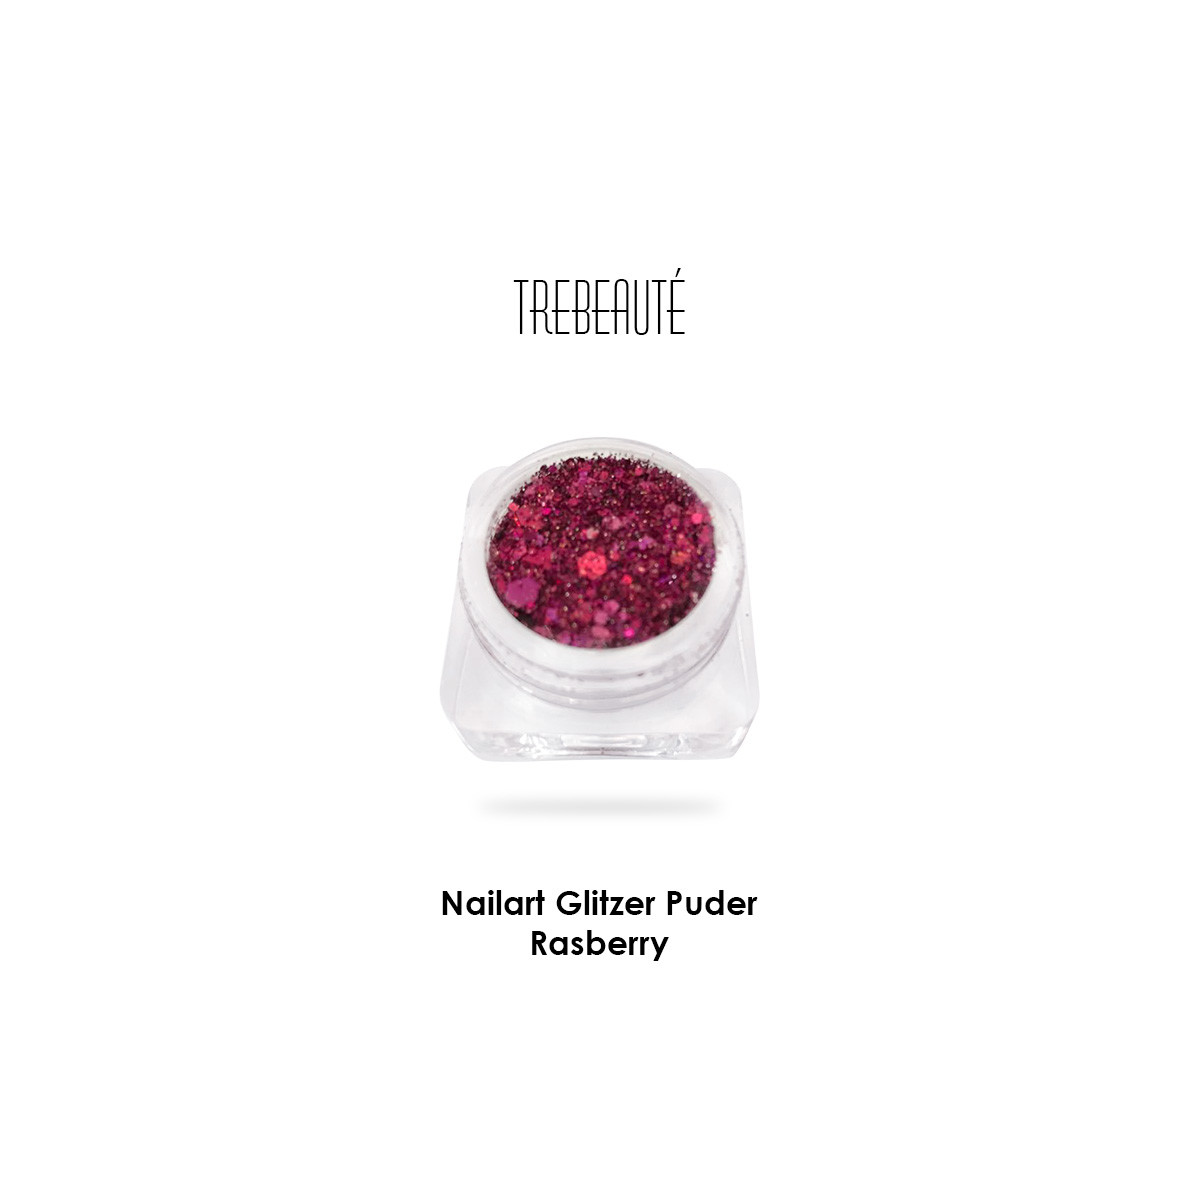 Nailart Glitzer Puder & Glitterstaub, Rasberry